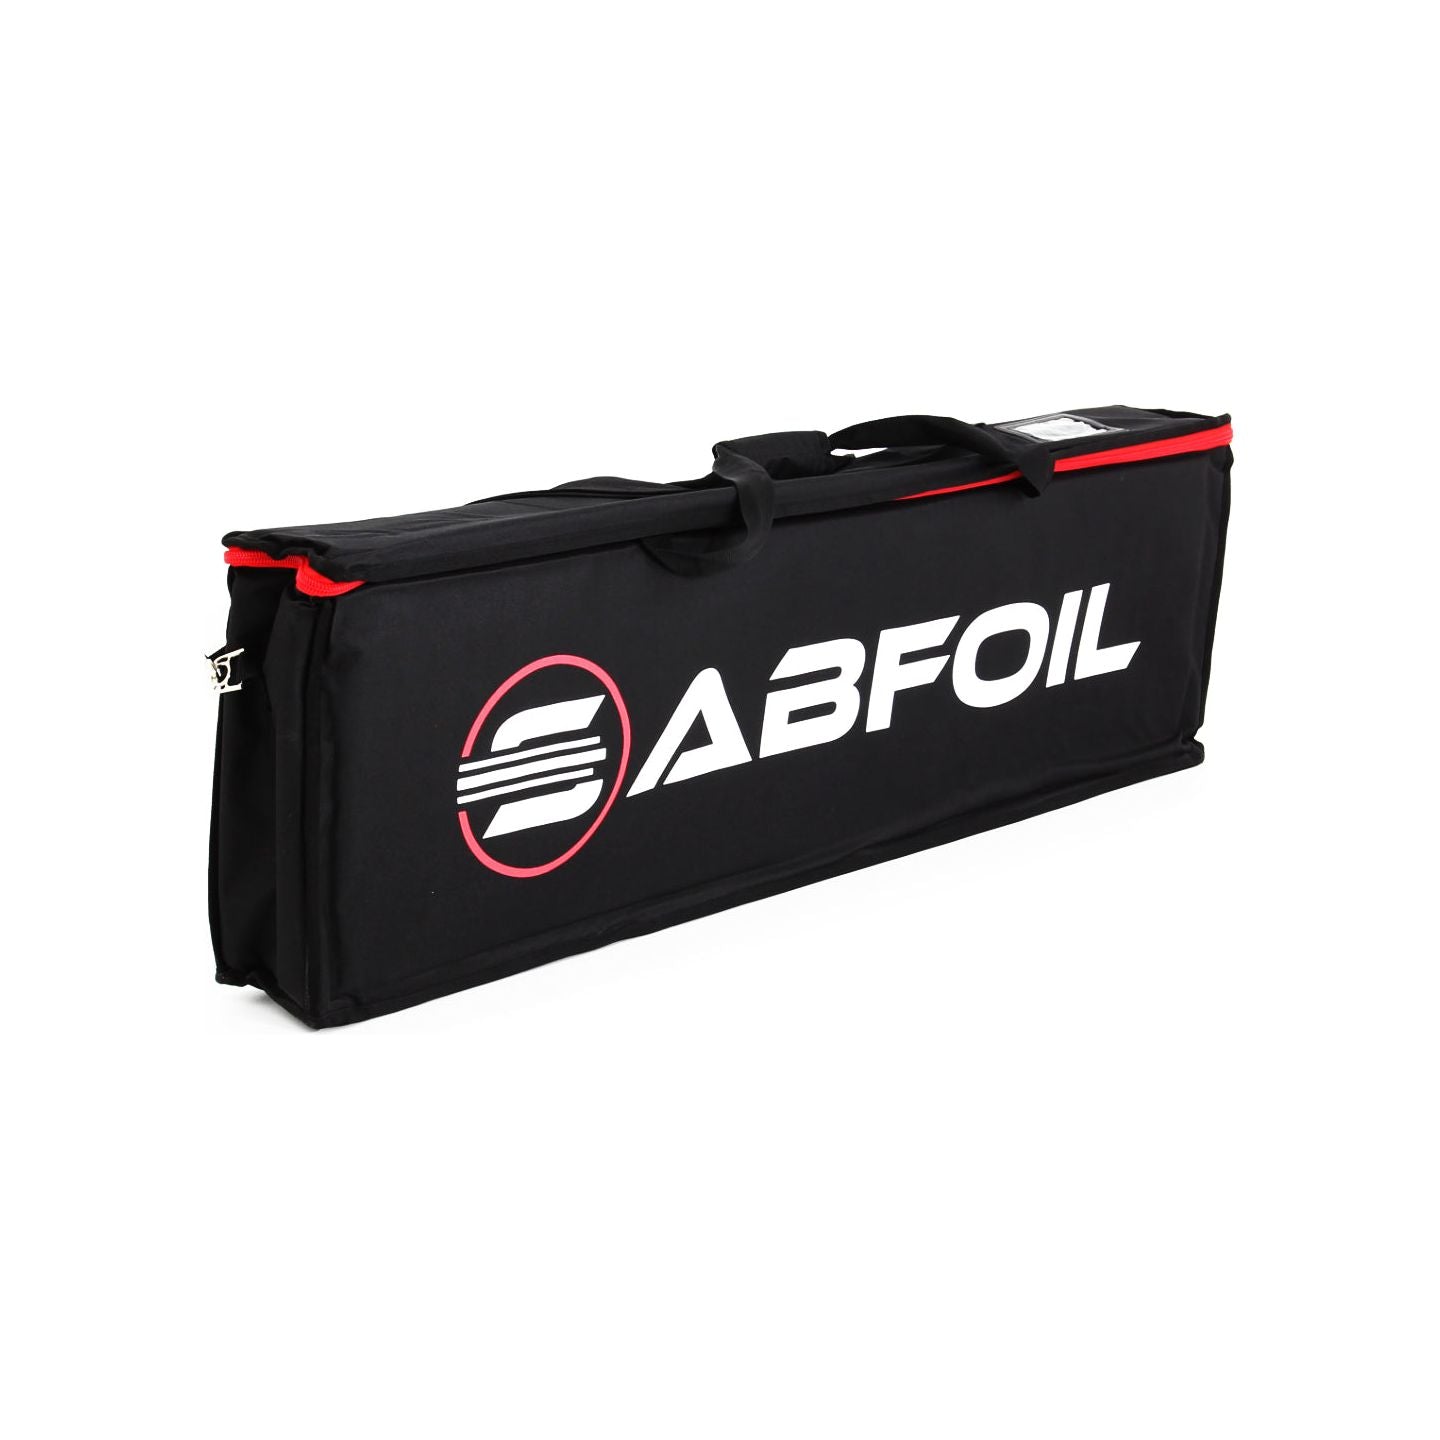 Sabfoil Razor Pro 975/76P | Hydrofoil Set